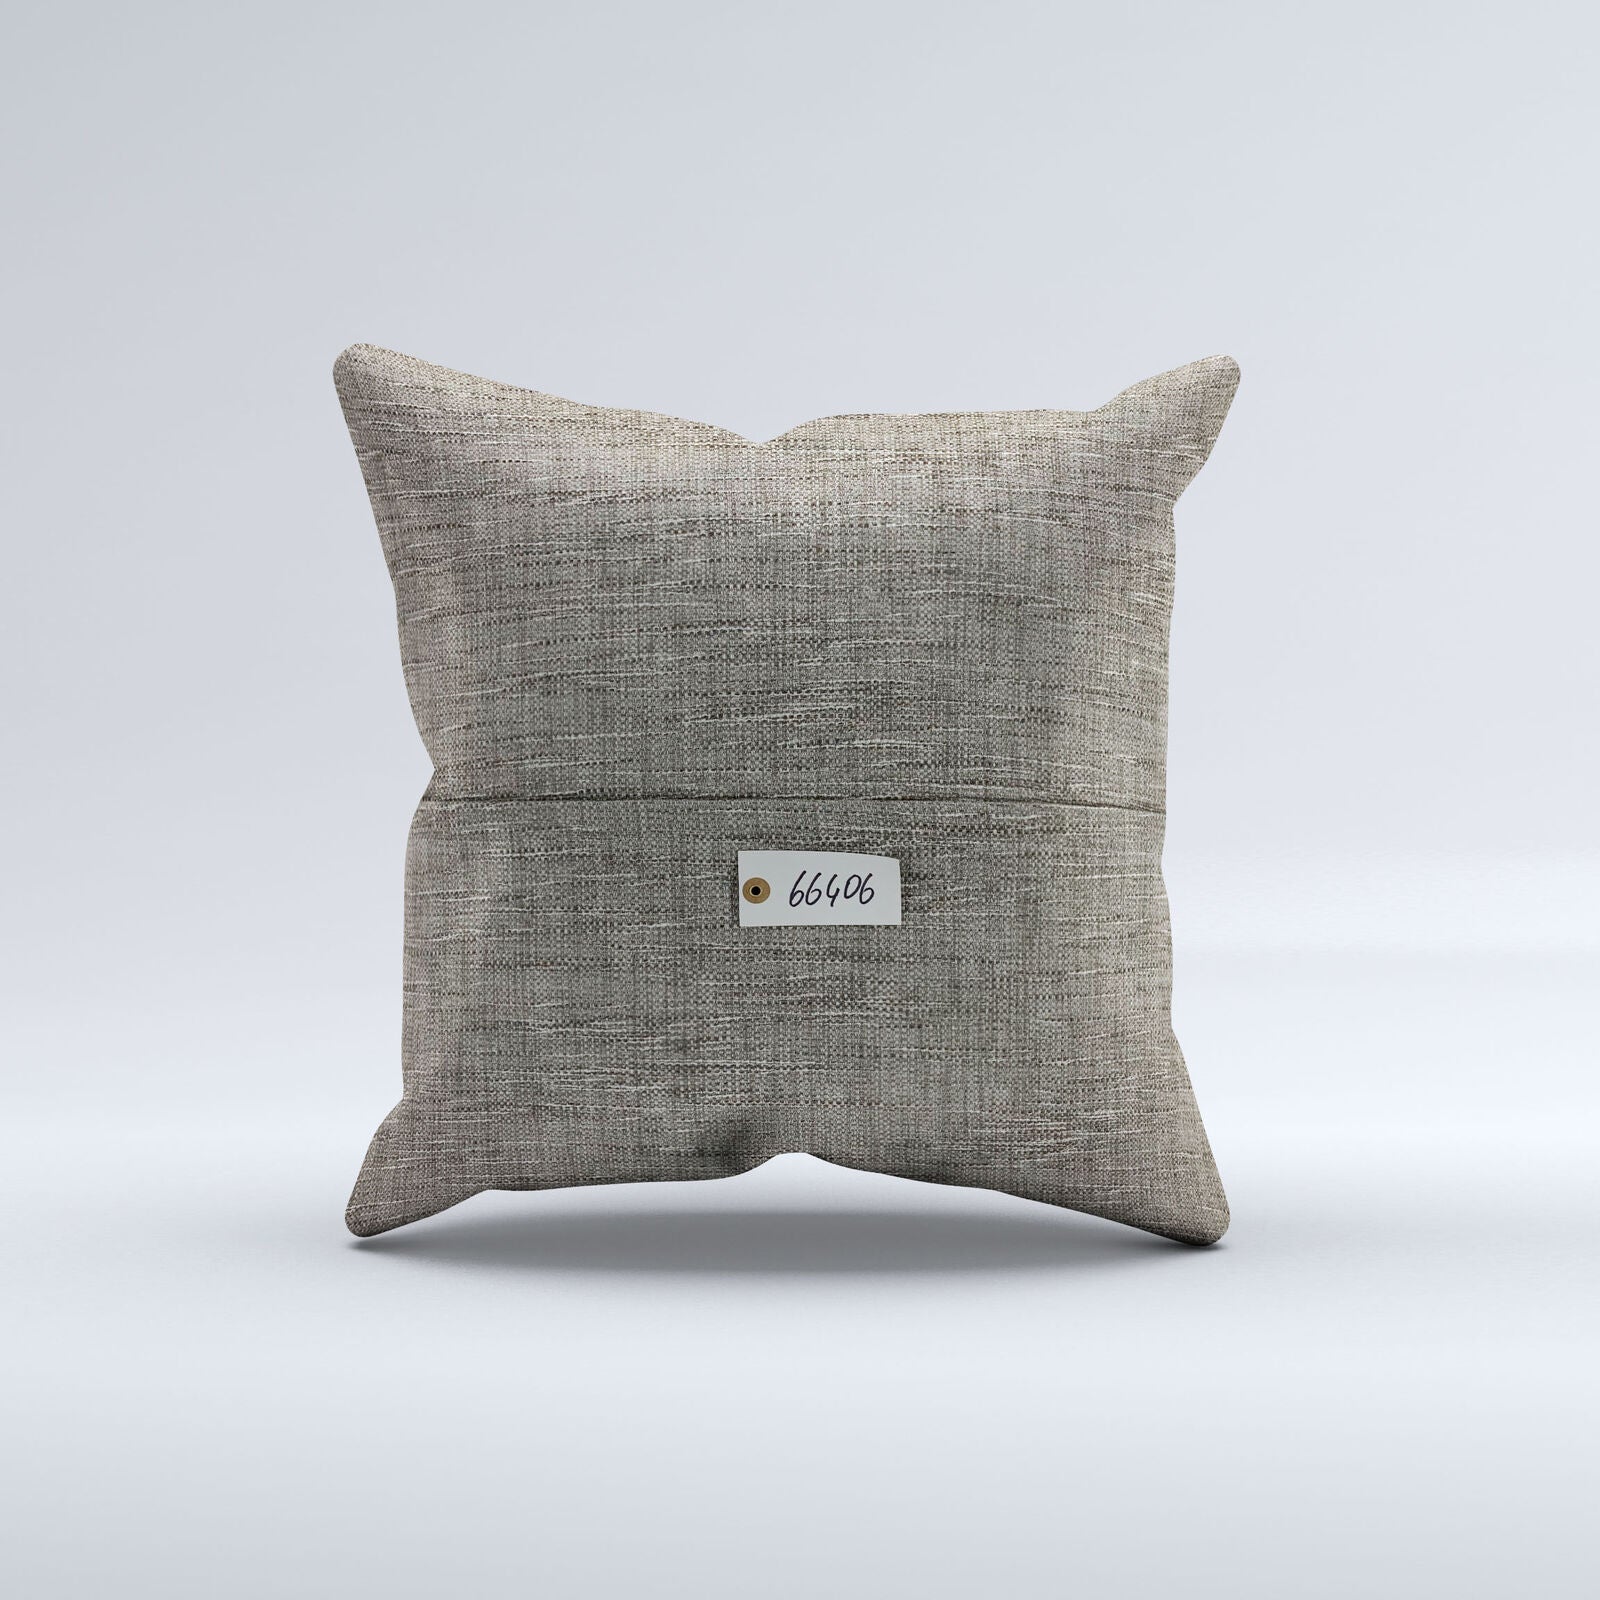 Vintage Turkish Kilim Cushion Cover 60x60 cm Square Wool Kelim Pillowcase 66406